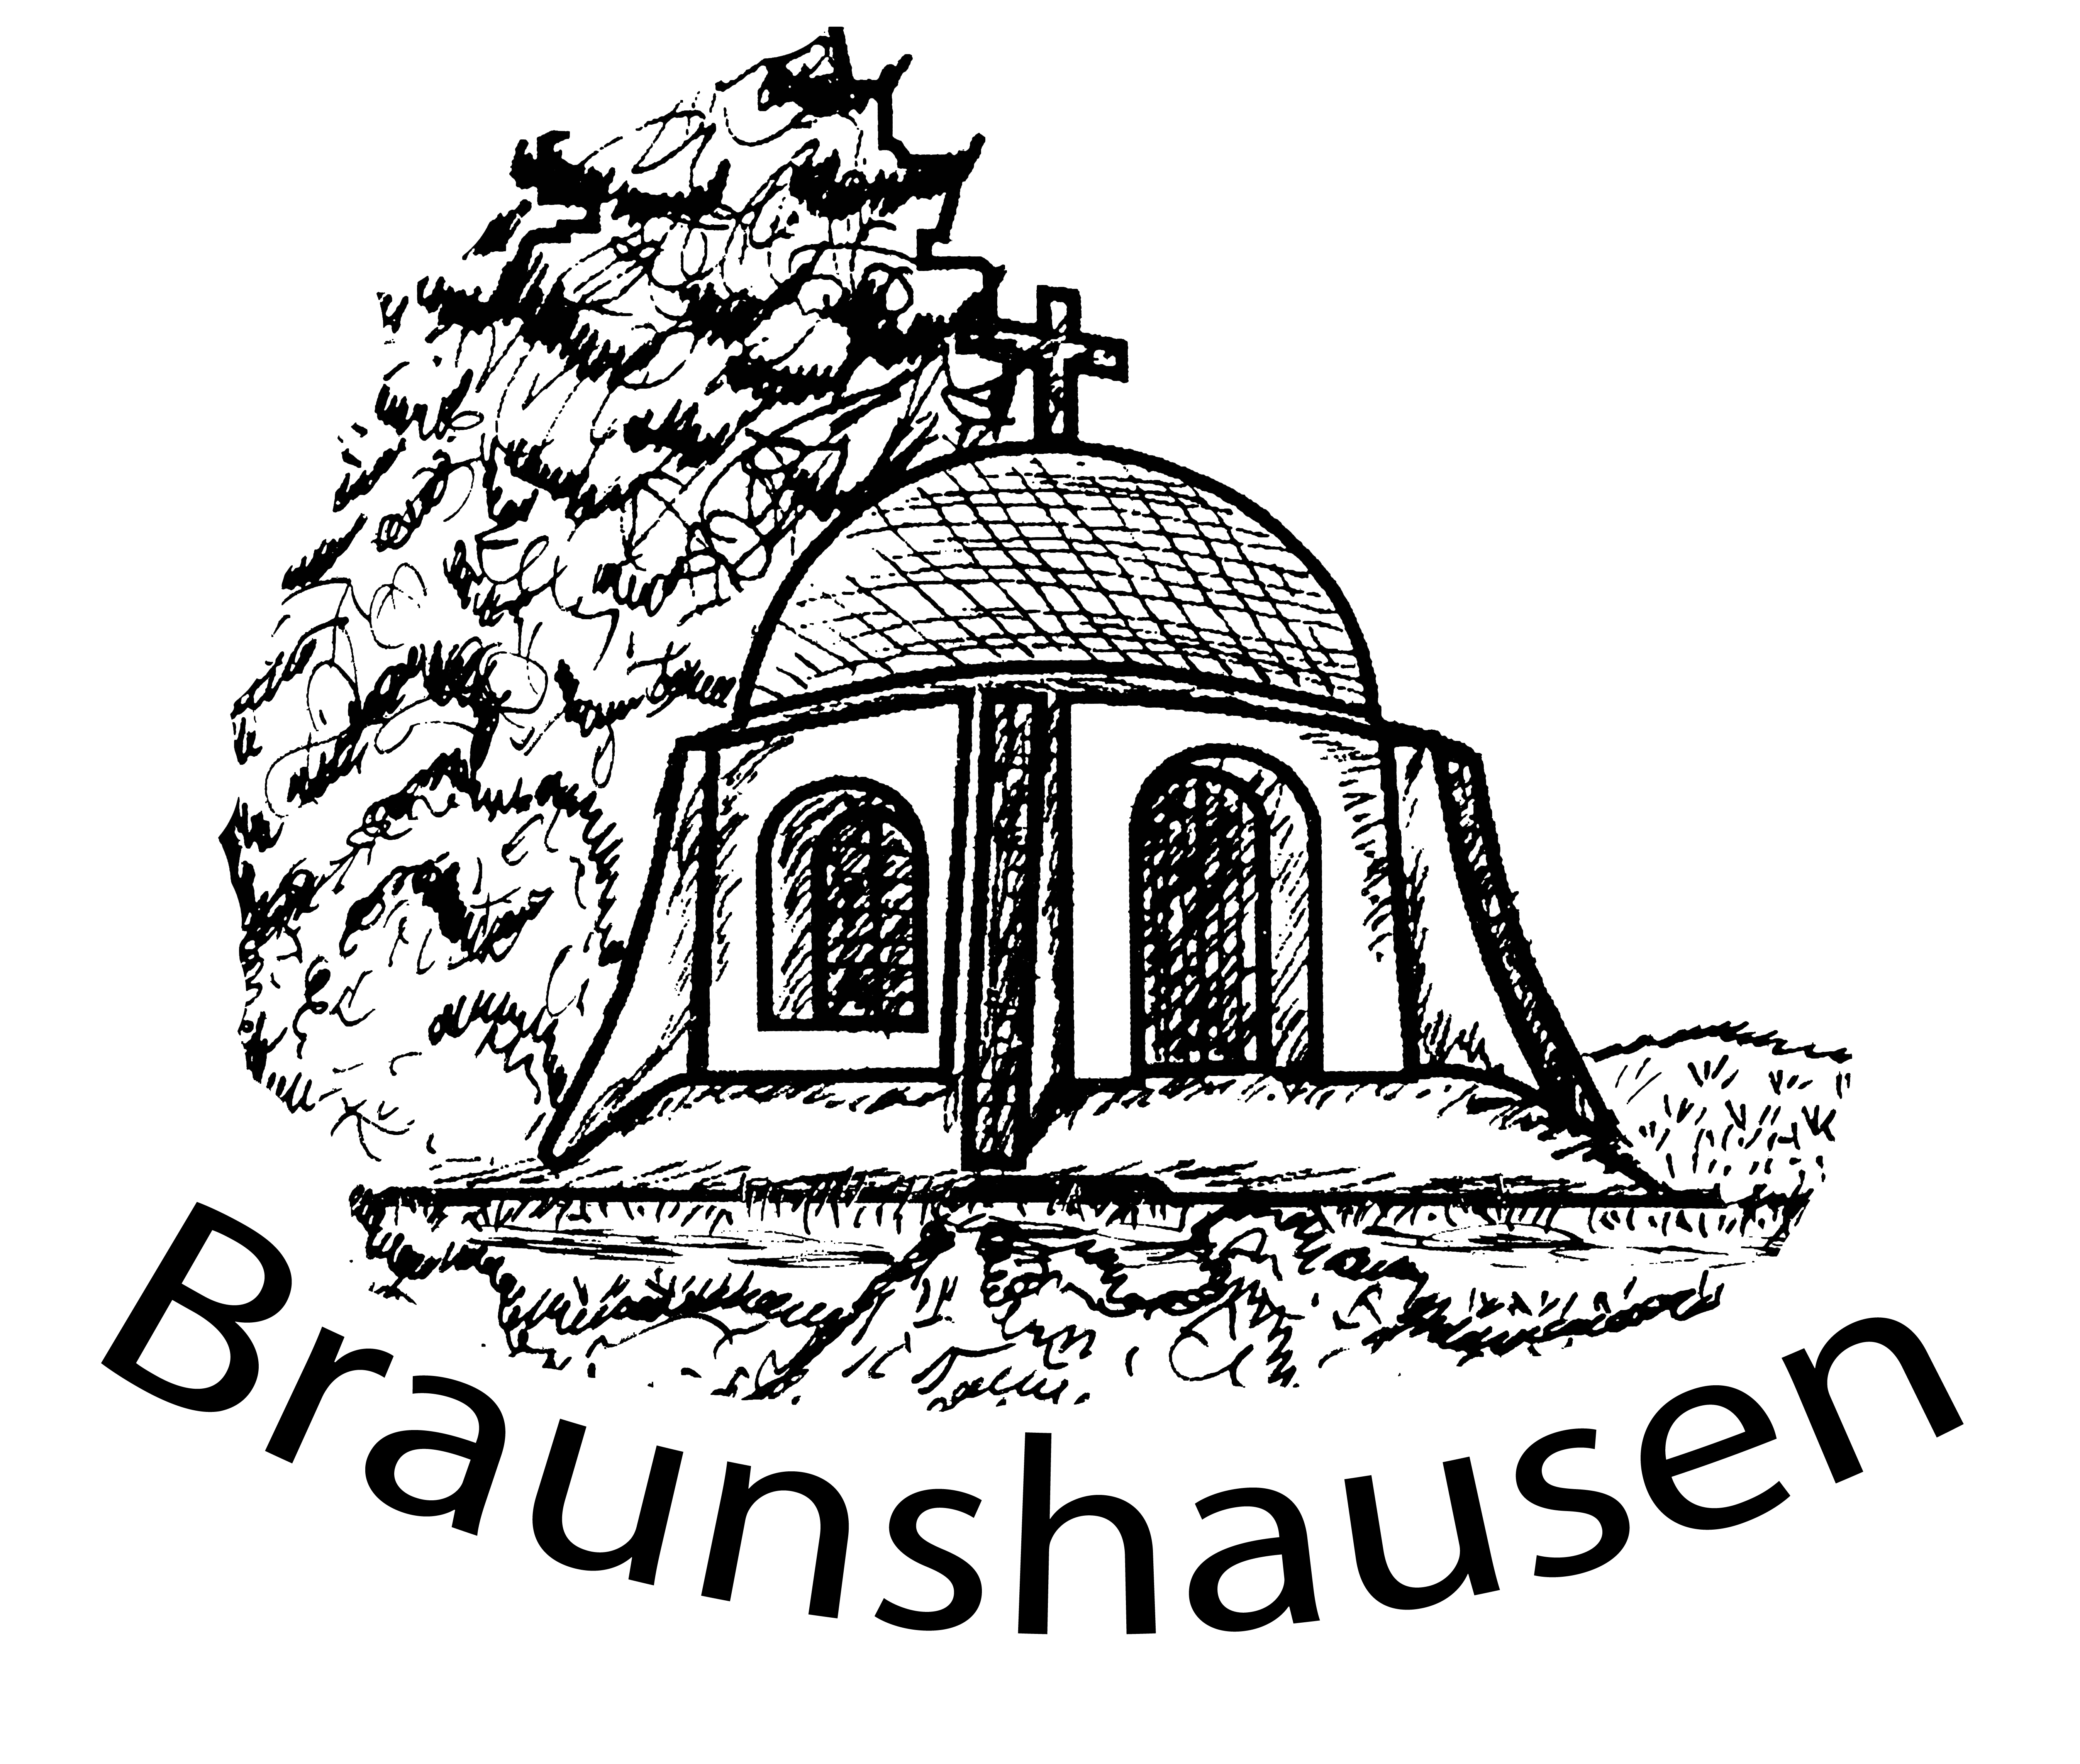 Braunshausen News